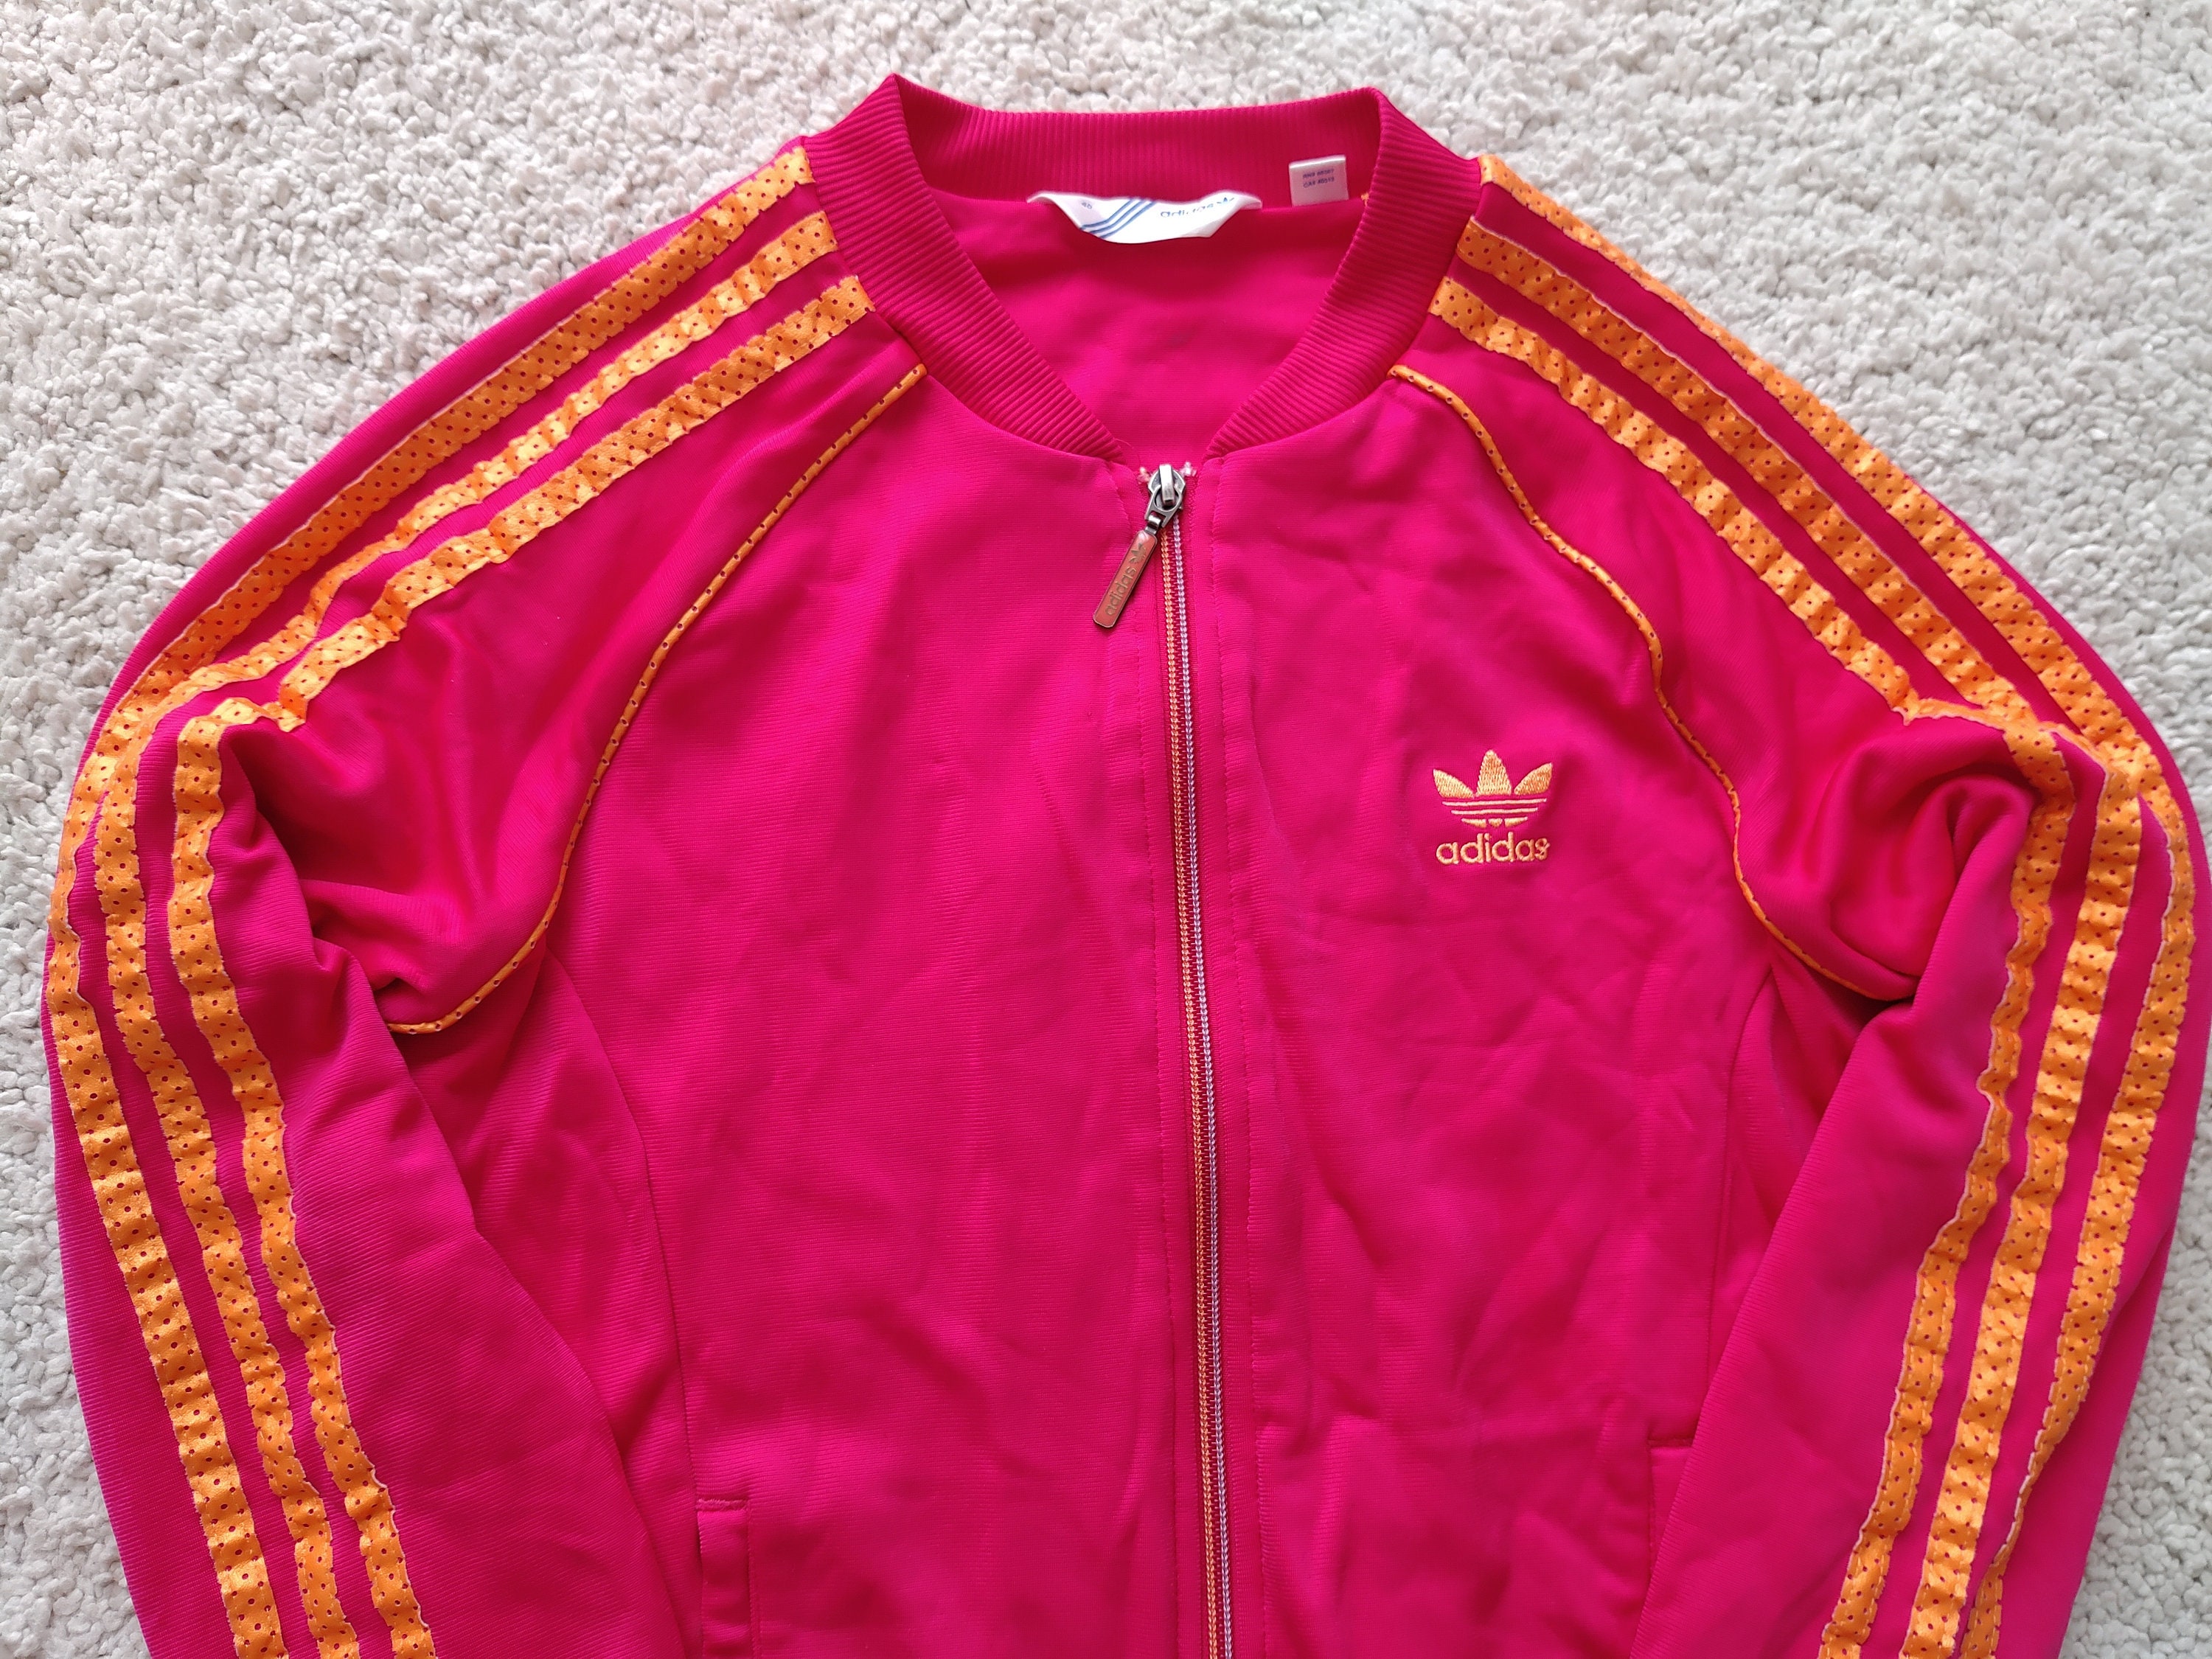 Adidas Originals Womens Track Top Jacket Pink Orange Yellow - Etsy